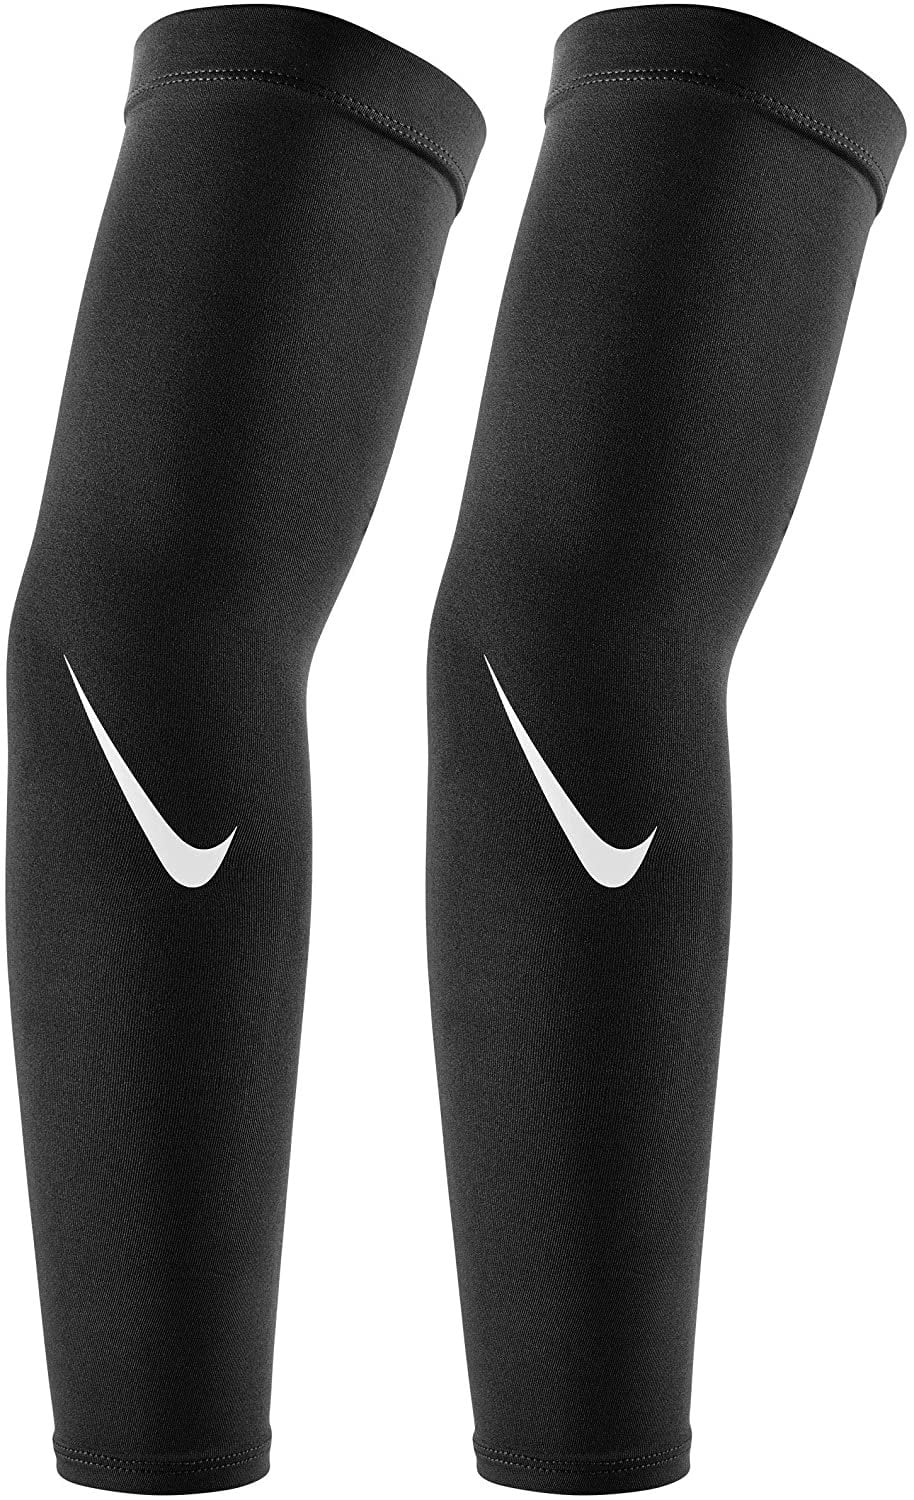 Nike Dri-Fit Sleeve 4.0 (Black/White, S/M) -